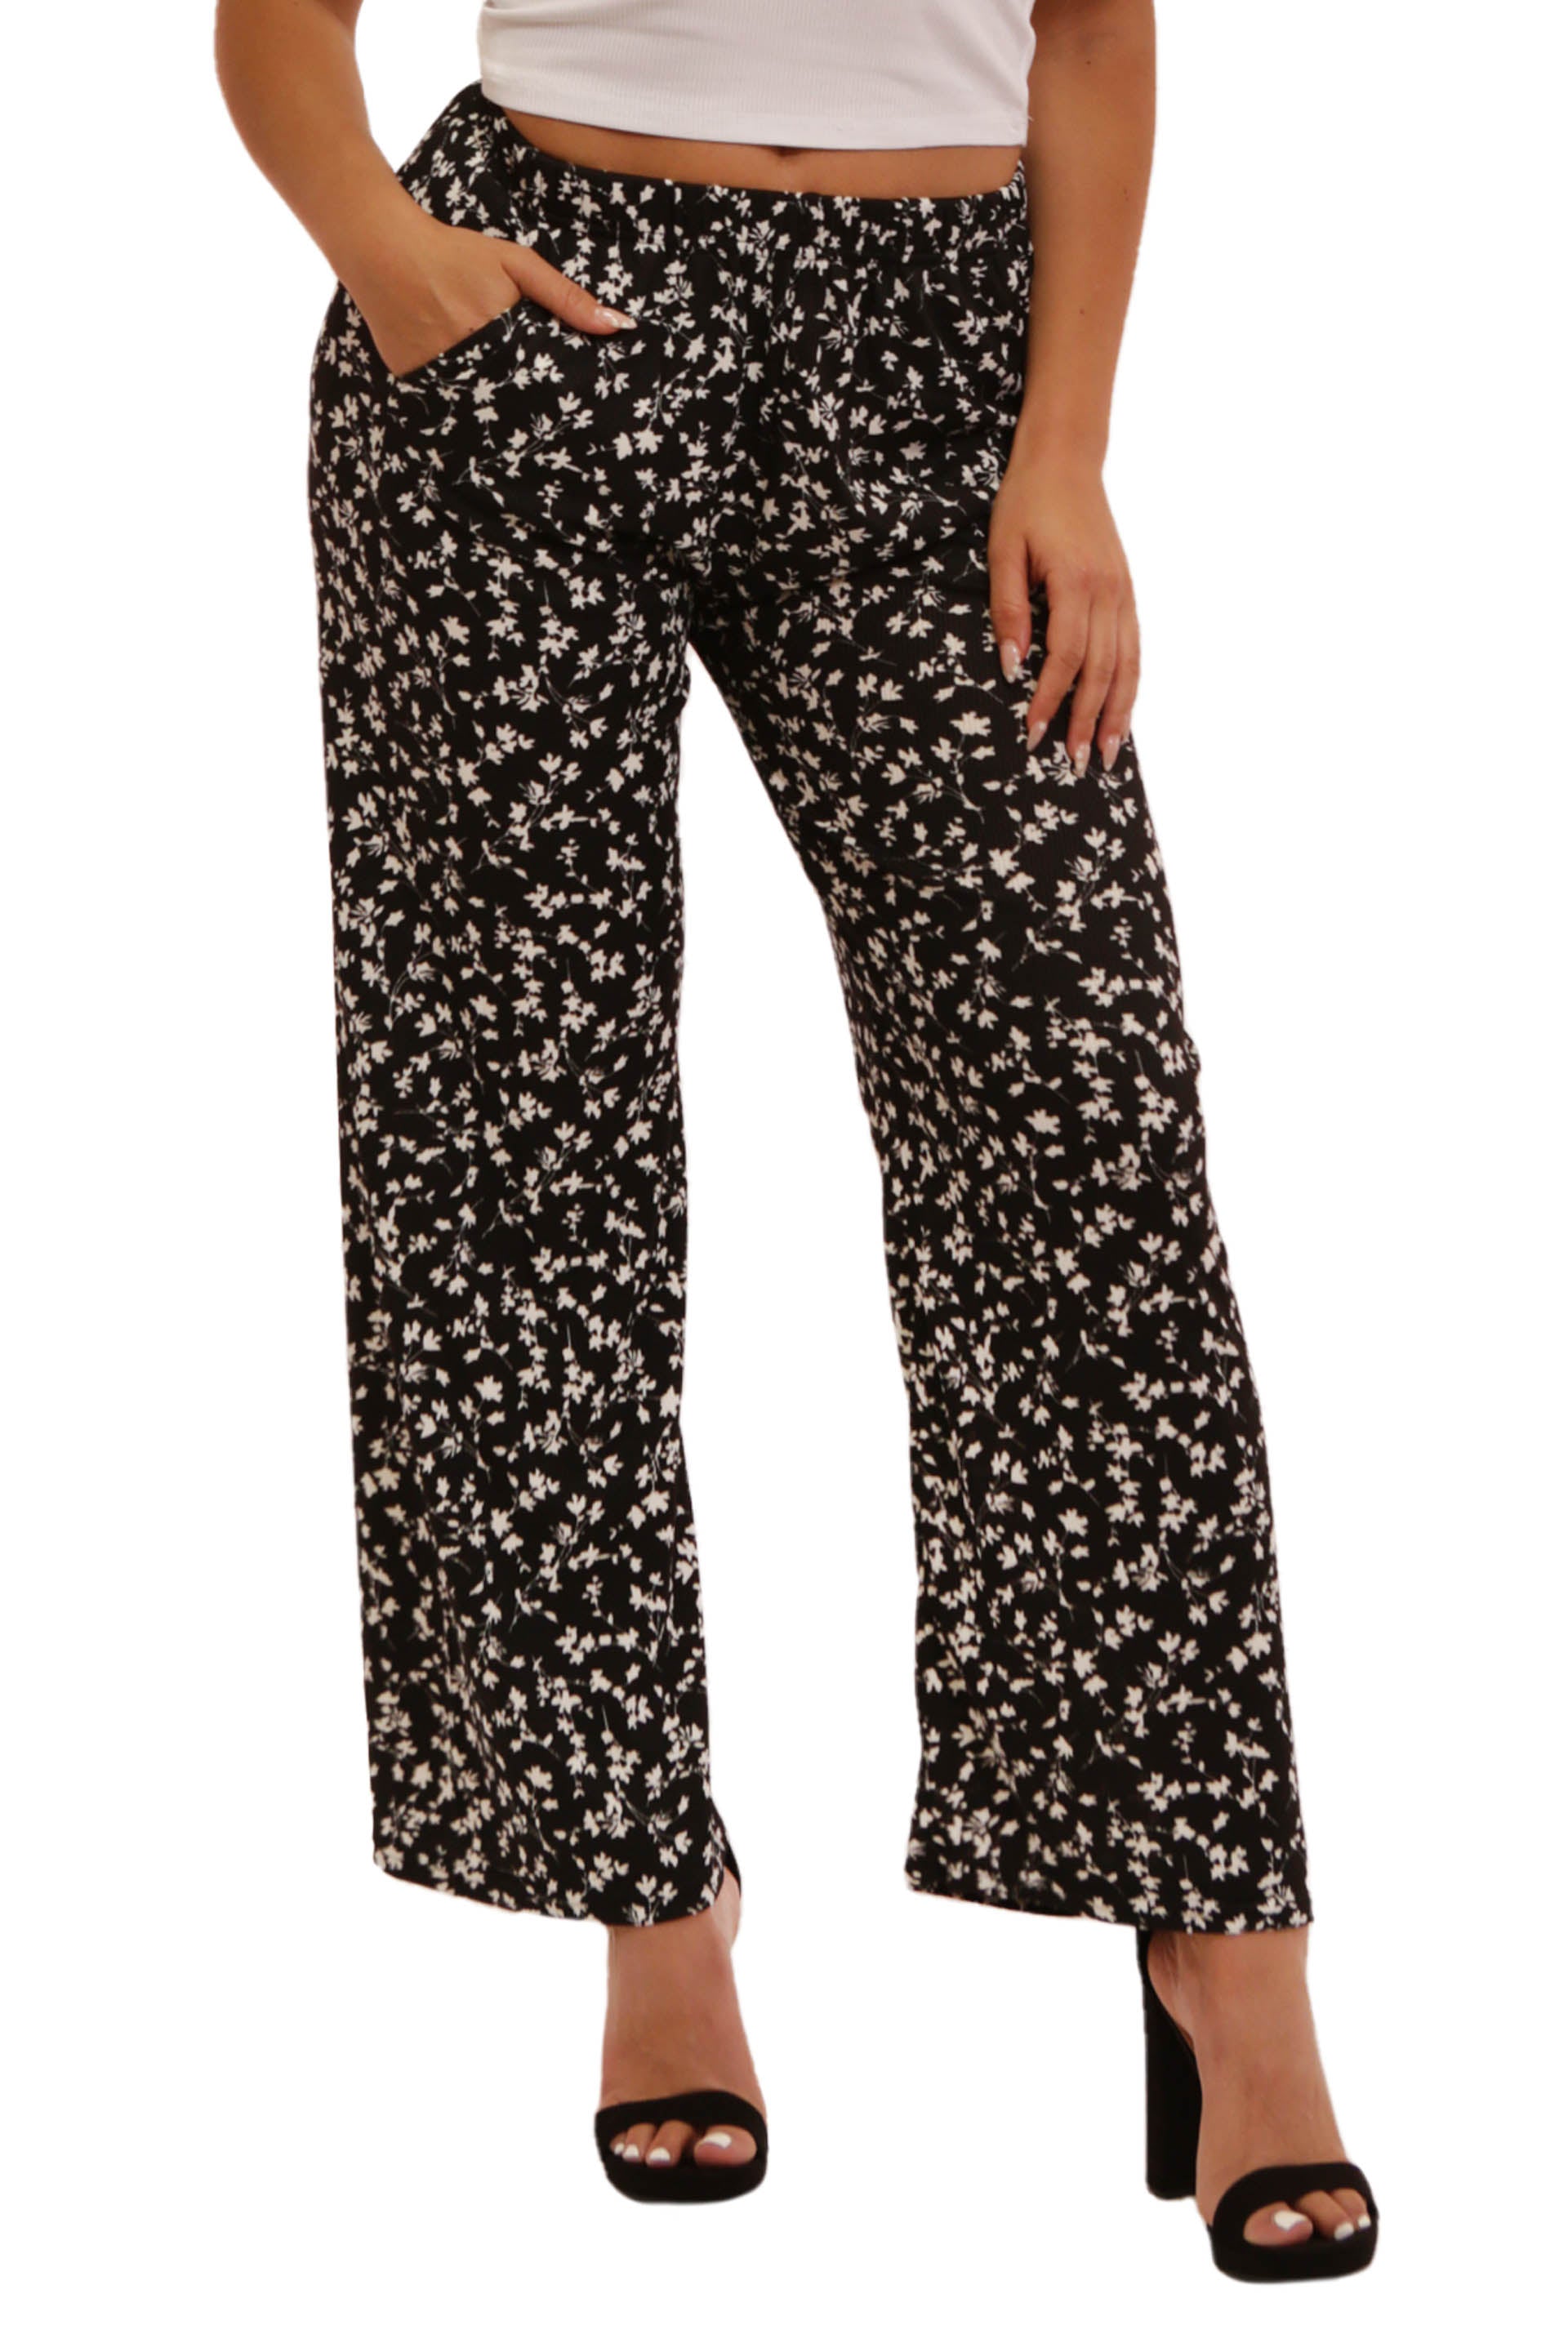 Wholesale Womens Elastic Waist Cropped Pull On Wide Leg Pants - Black & White Flower - S&G Apparel